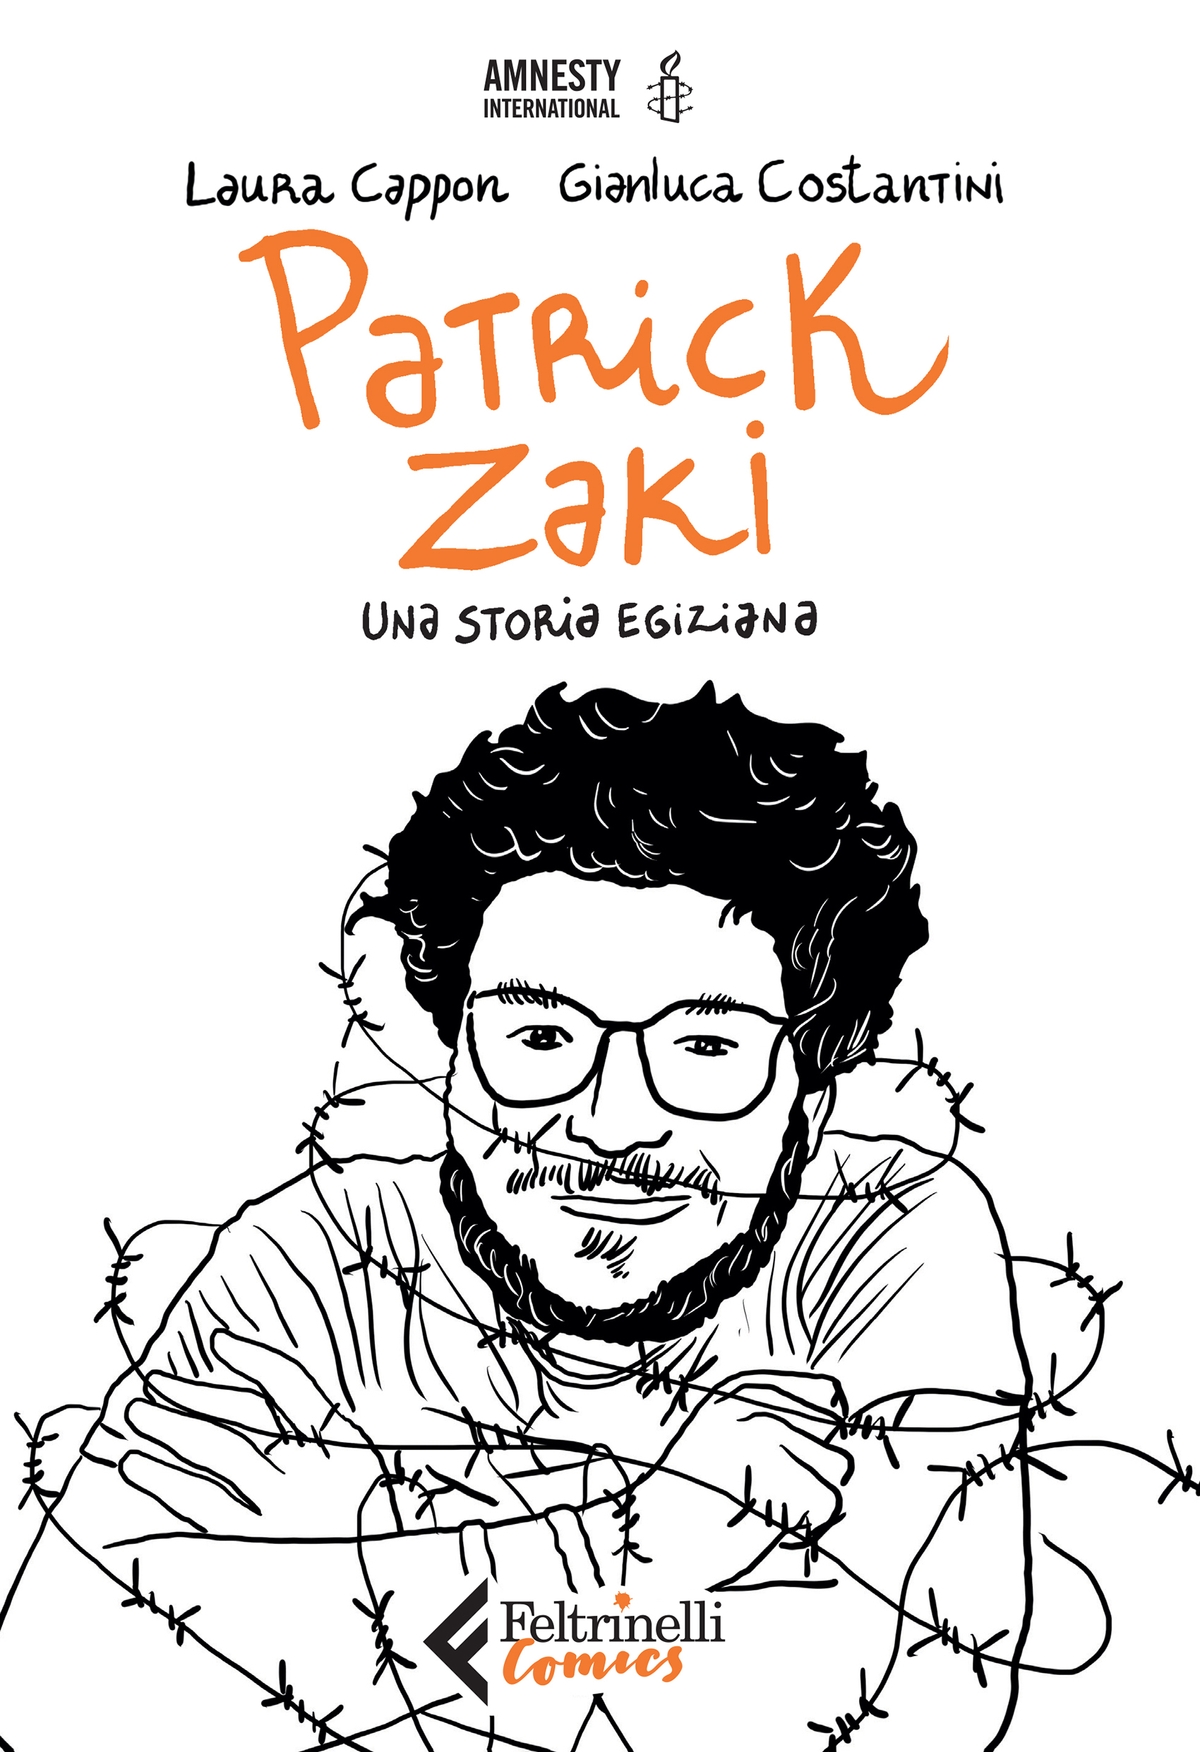 Laura Cappon & Gianluca Costantini – Patrick Zaki. Una storia egiziana (Feltrinelli Comics, Milano 2022) _cover